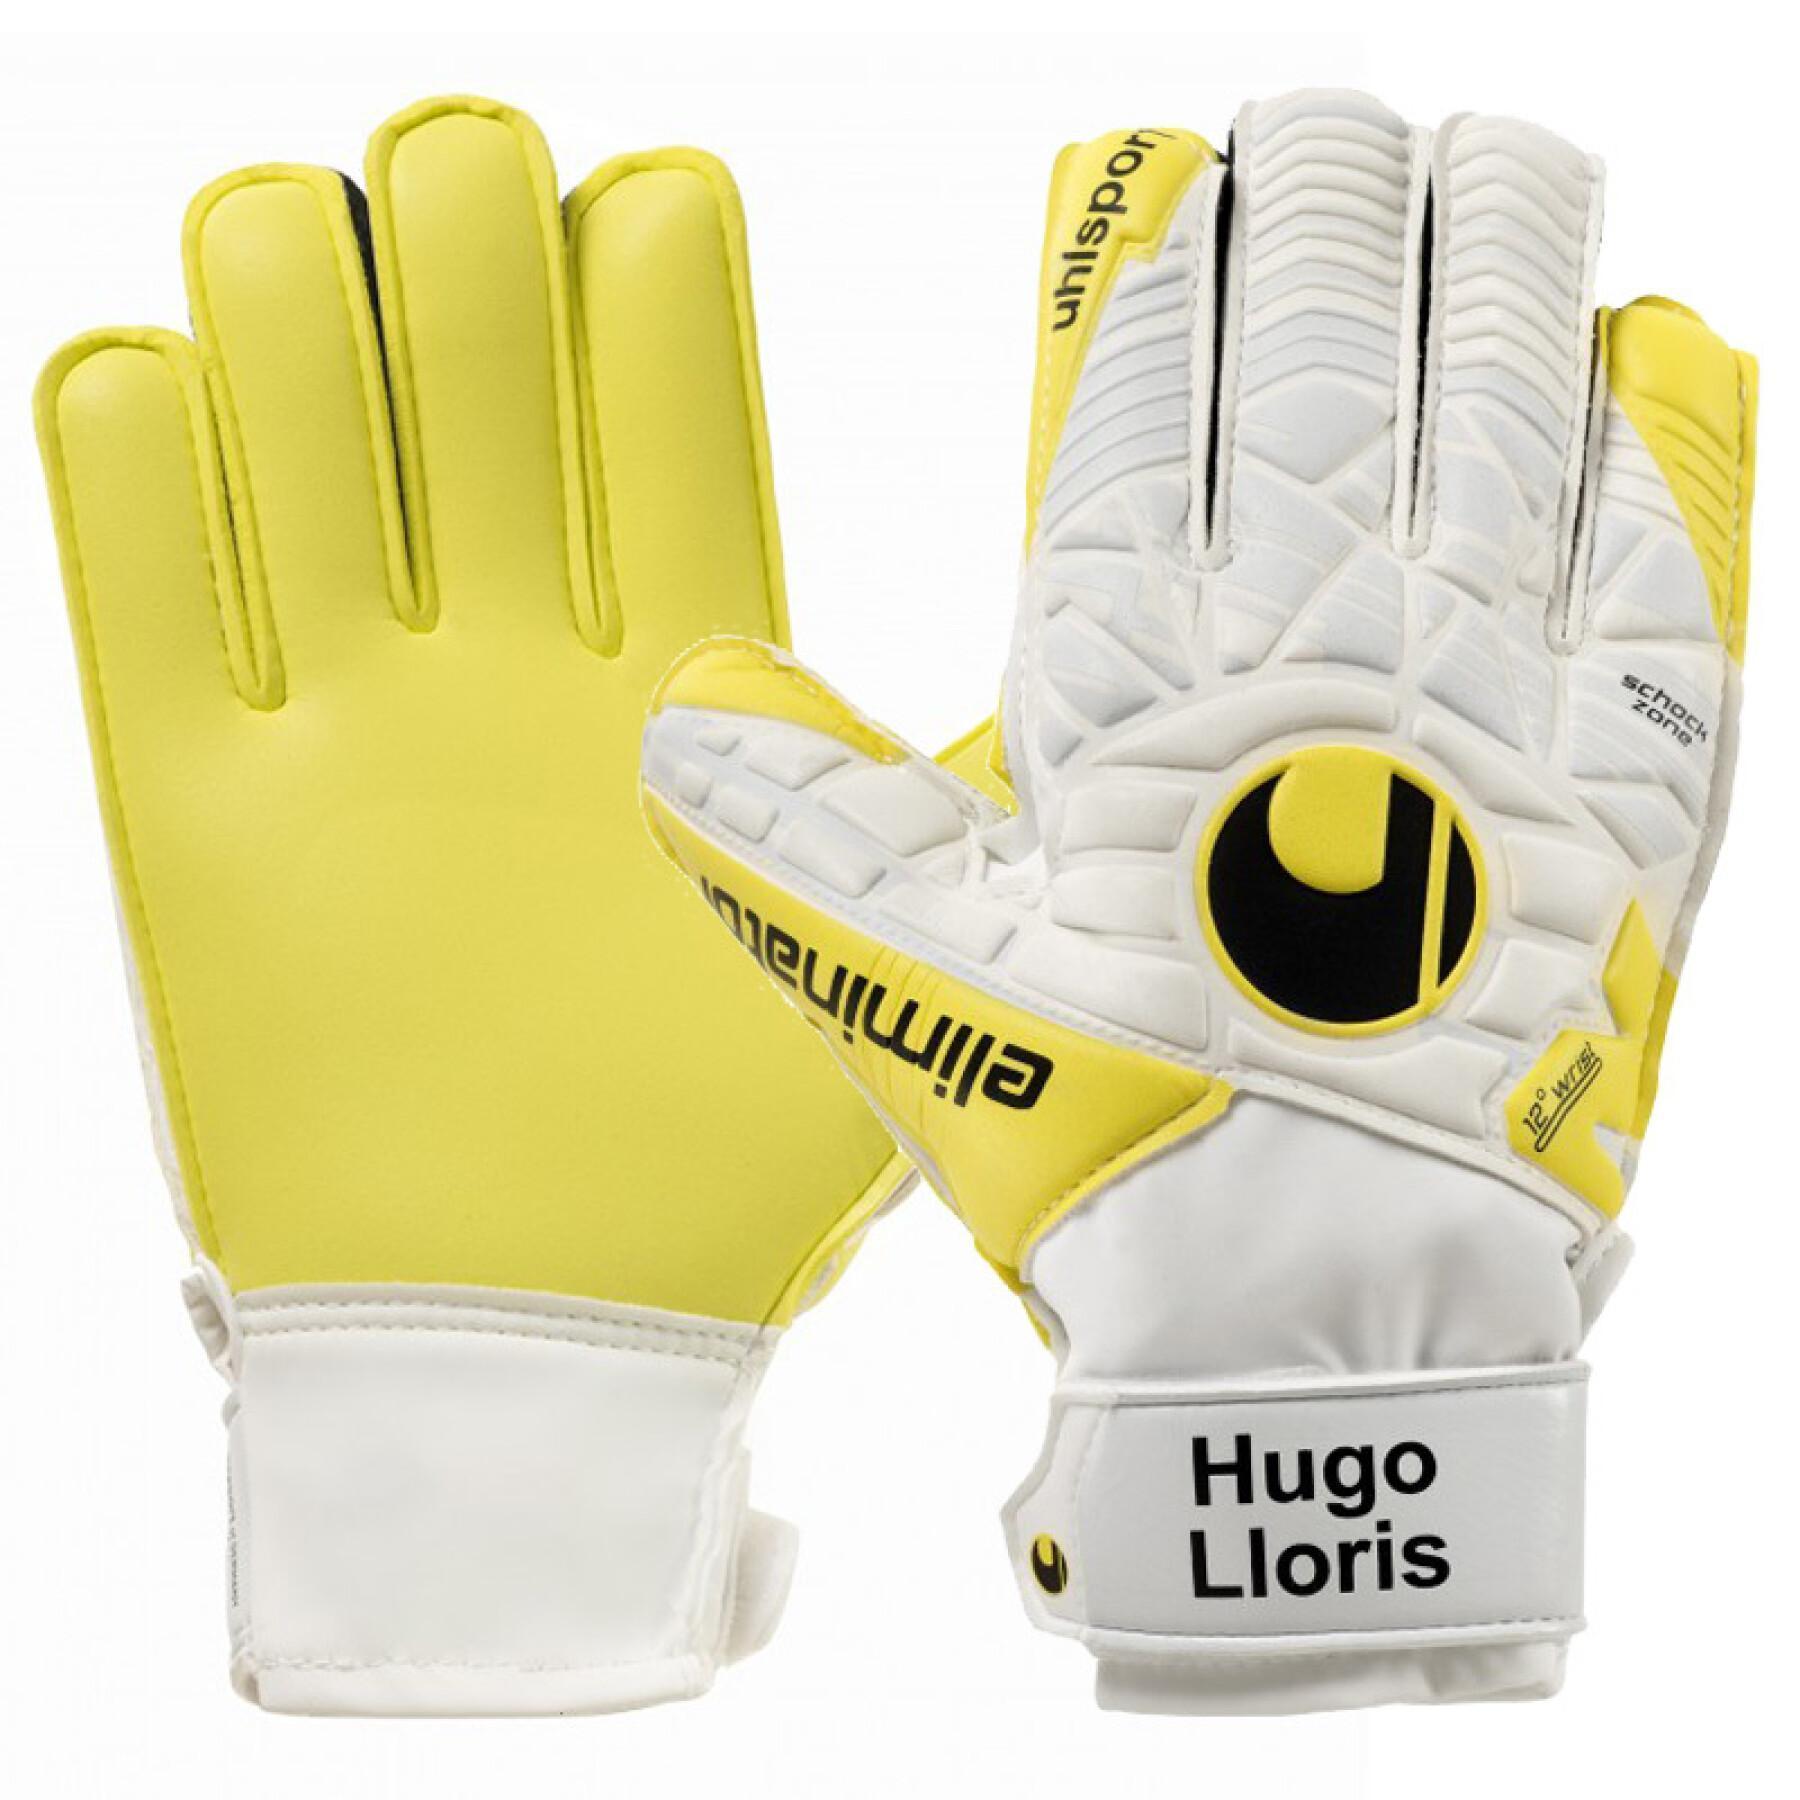 uhsport eliminator lloris soft advanced goalkeeper gloves